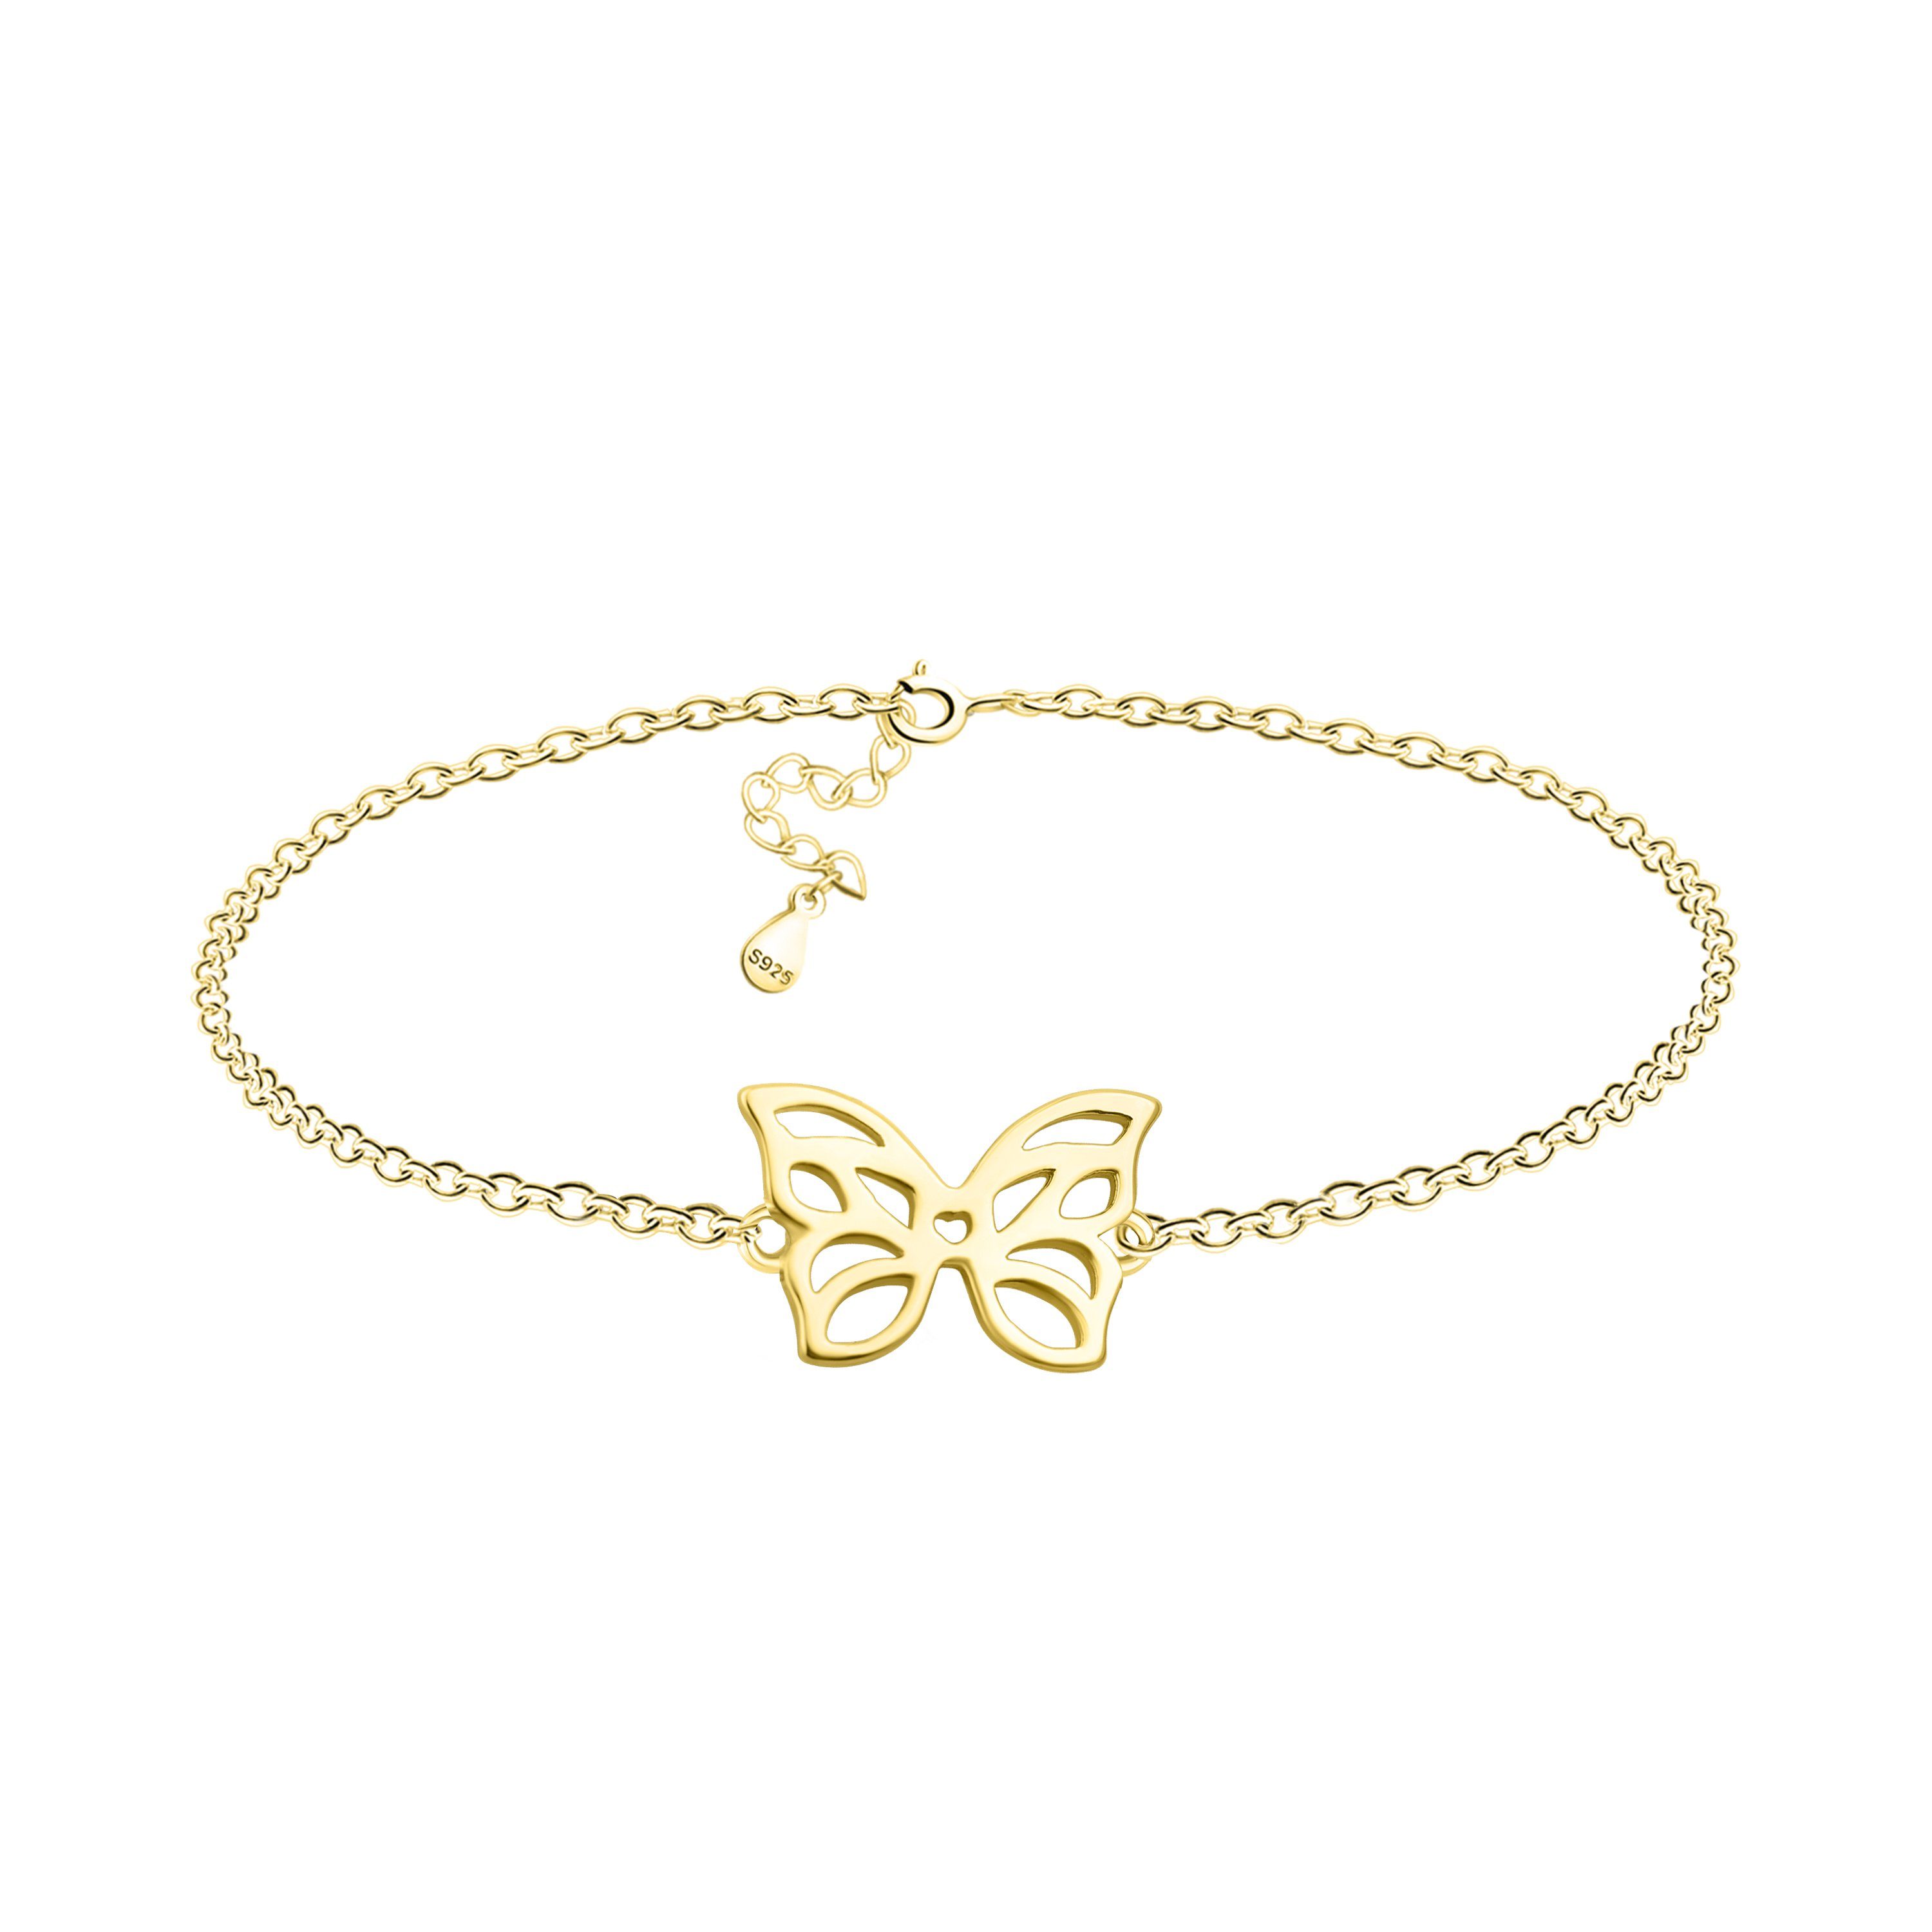 Sofia Milani Armband Schmetterling (Armband), 925 Silber Damen Schmuck gold